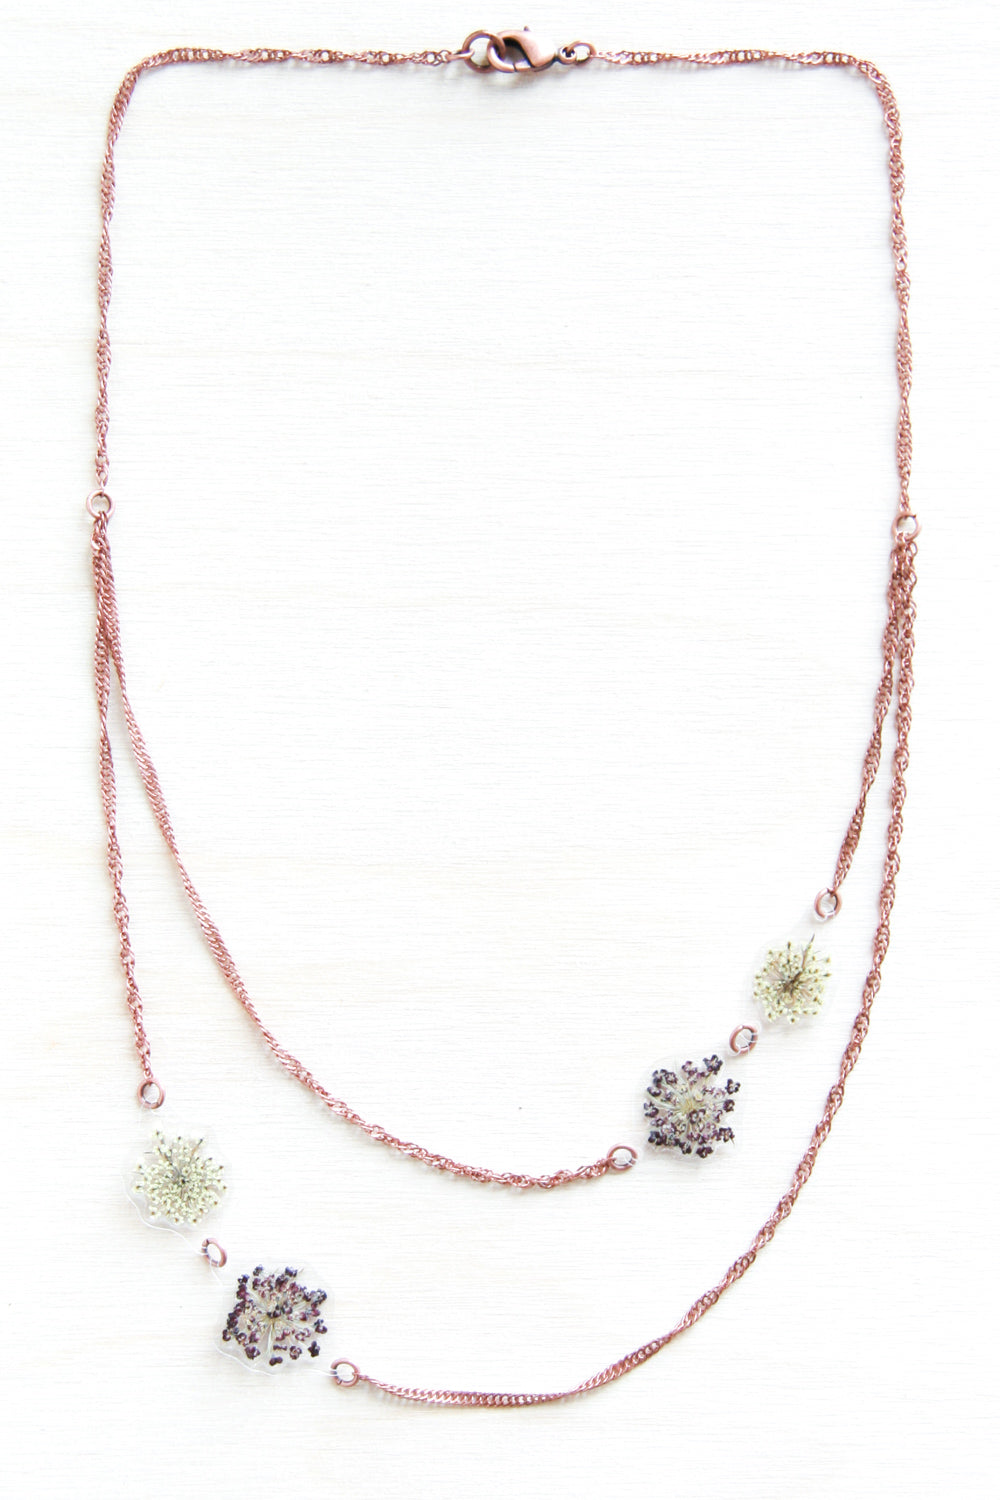 White & Purple Queen Anne’s Lace Asymmetrical Necklace